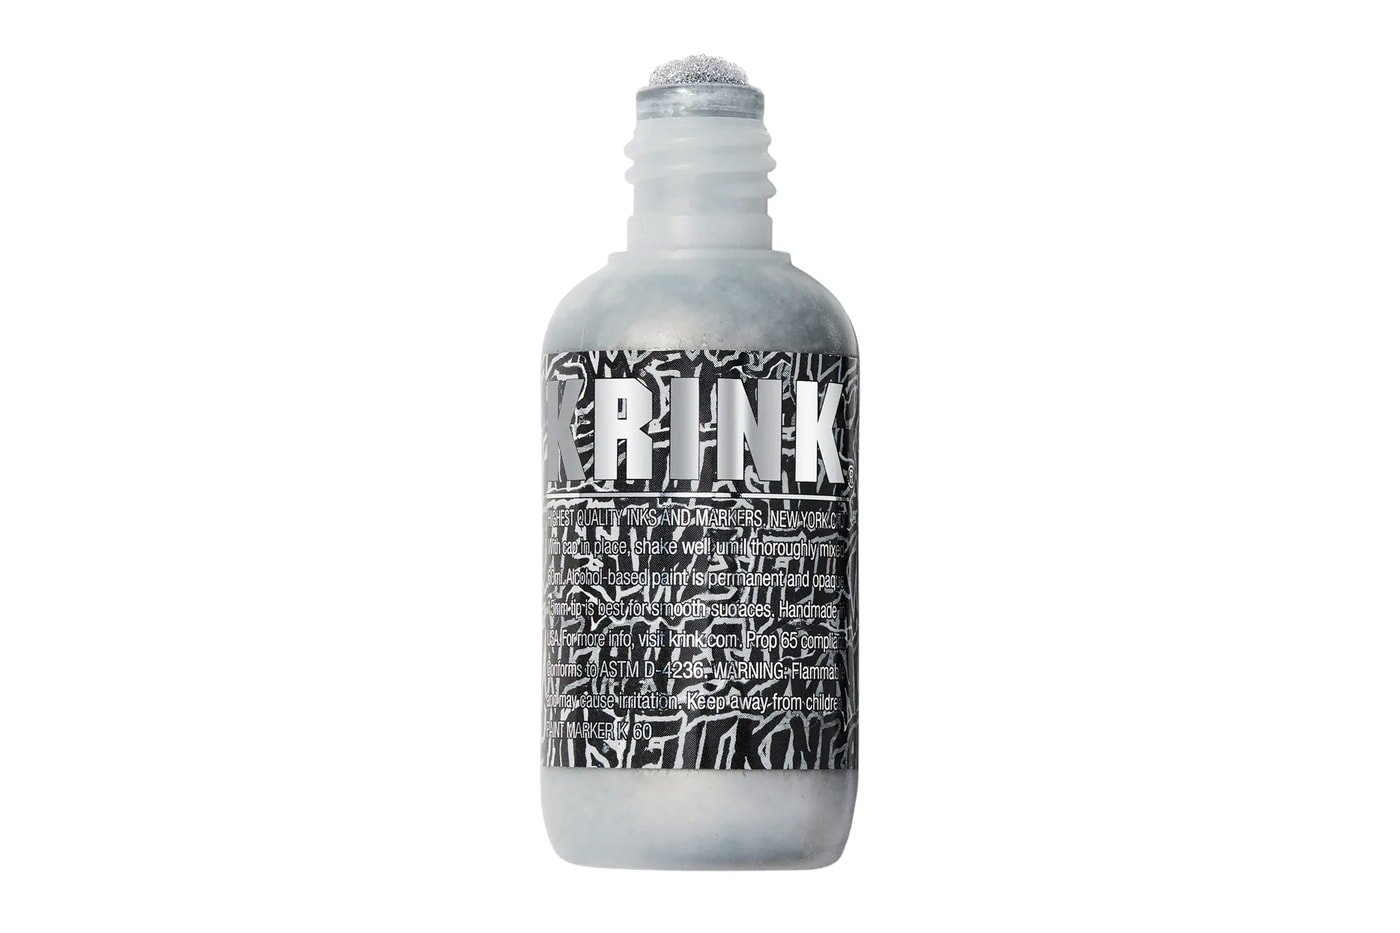 Krink K-42 Permanent Paint Marker - White